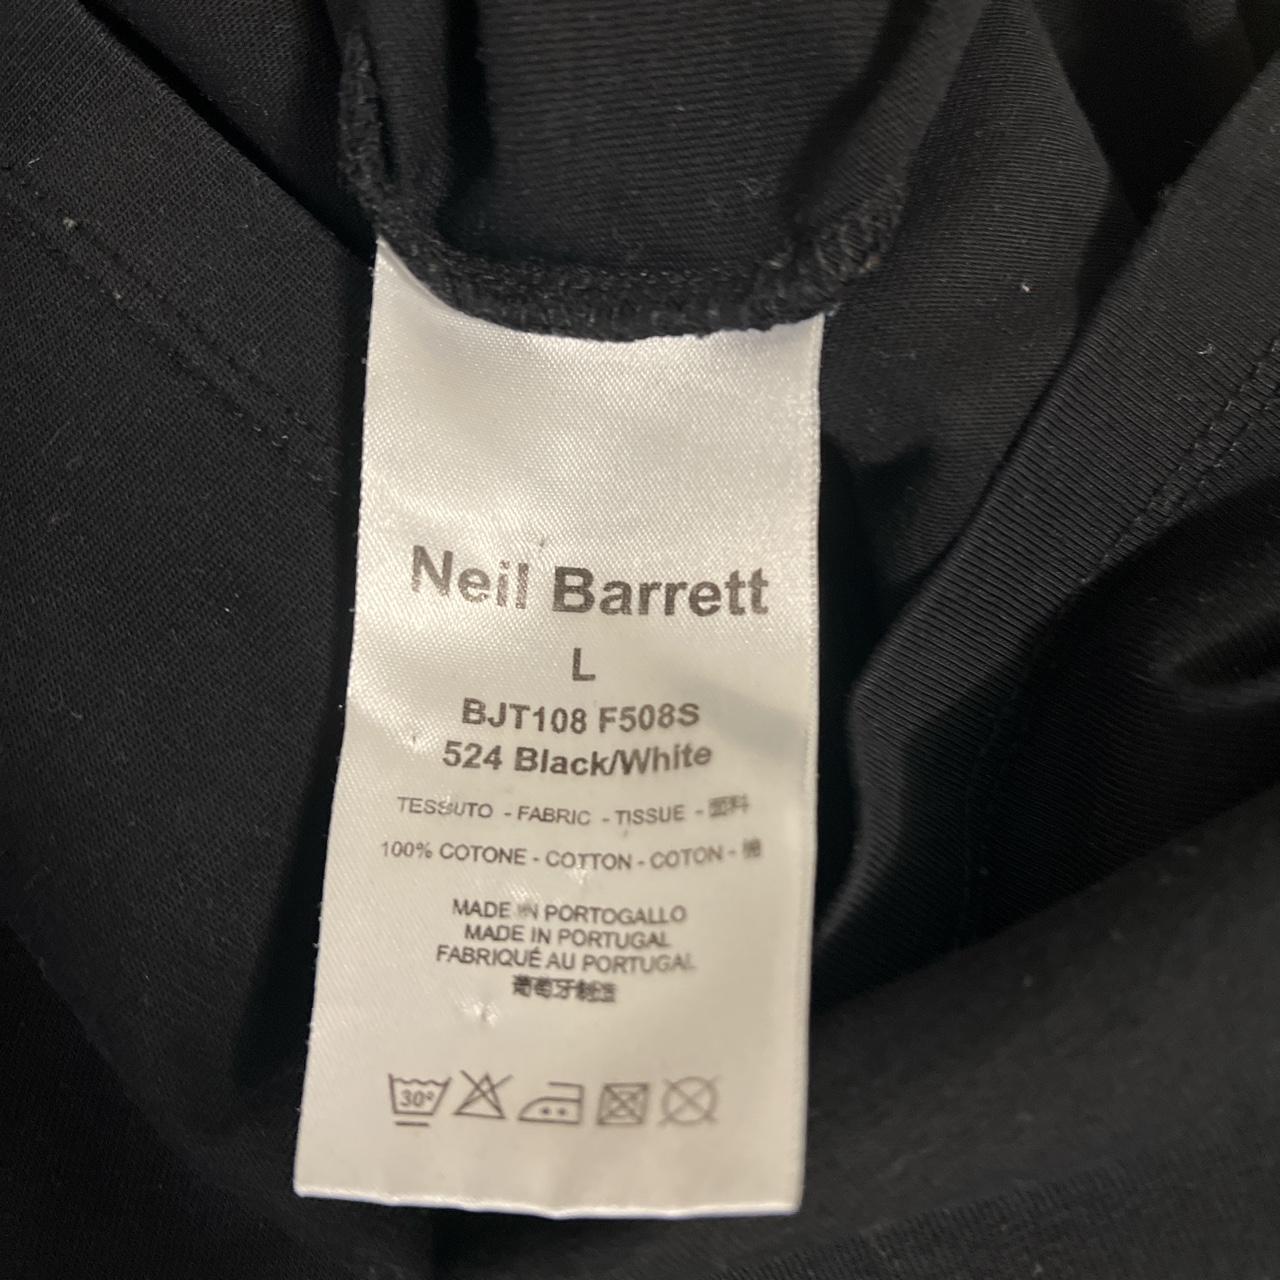 Neil Barrett T shirt Large Like new Excellent... - Depop